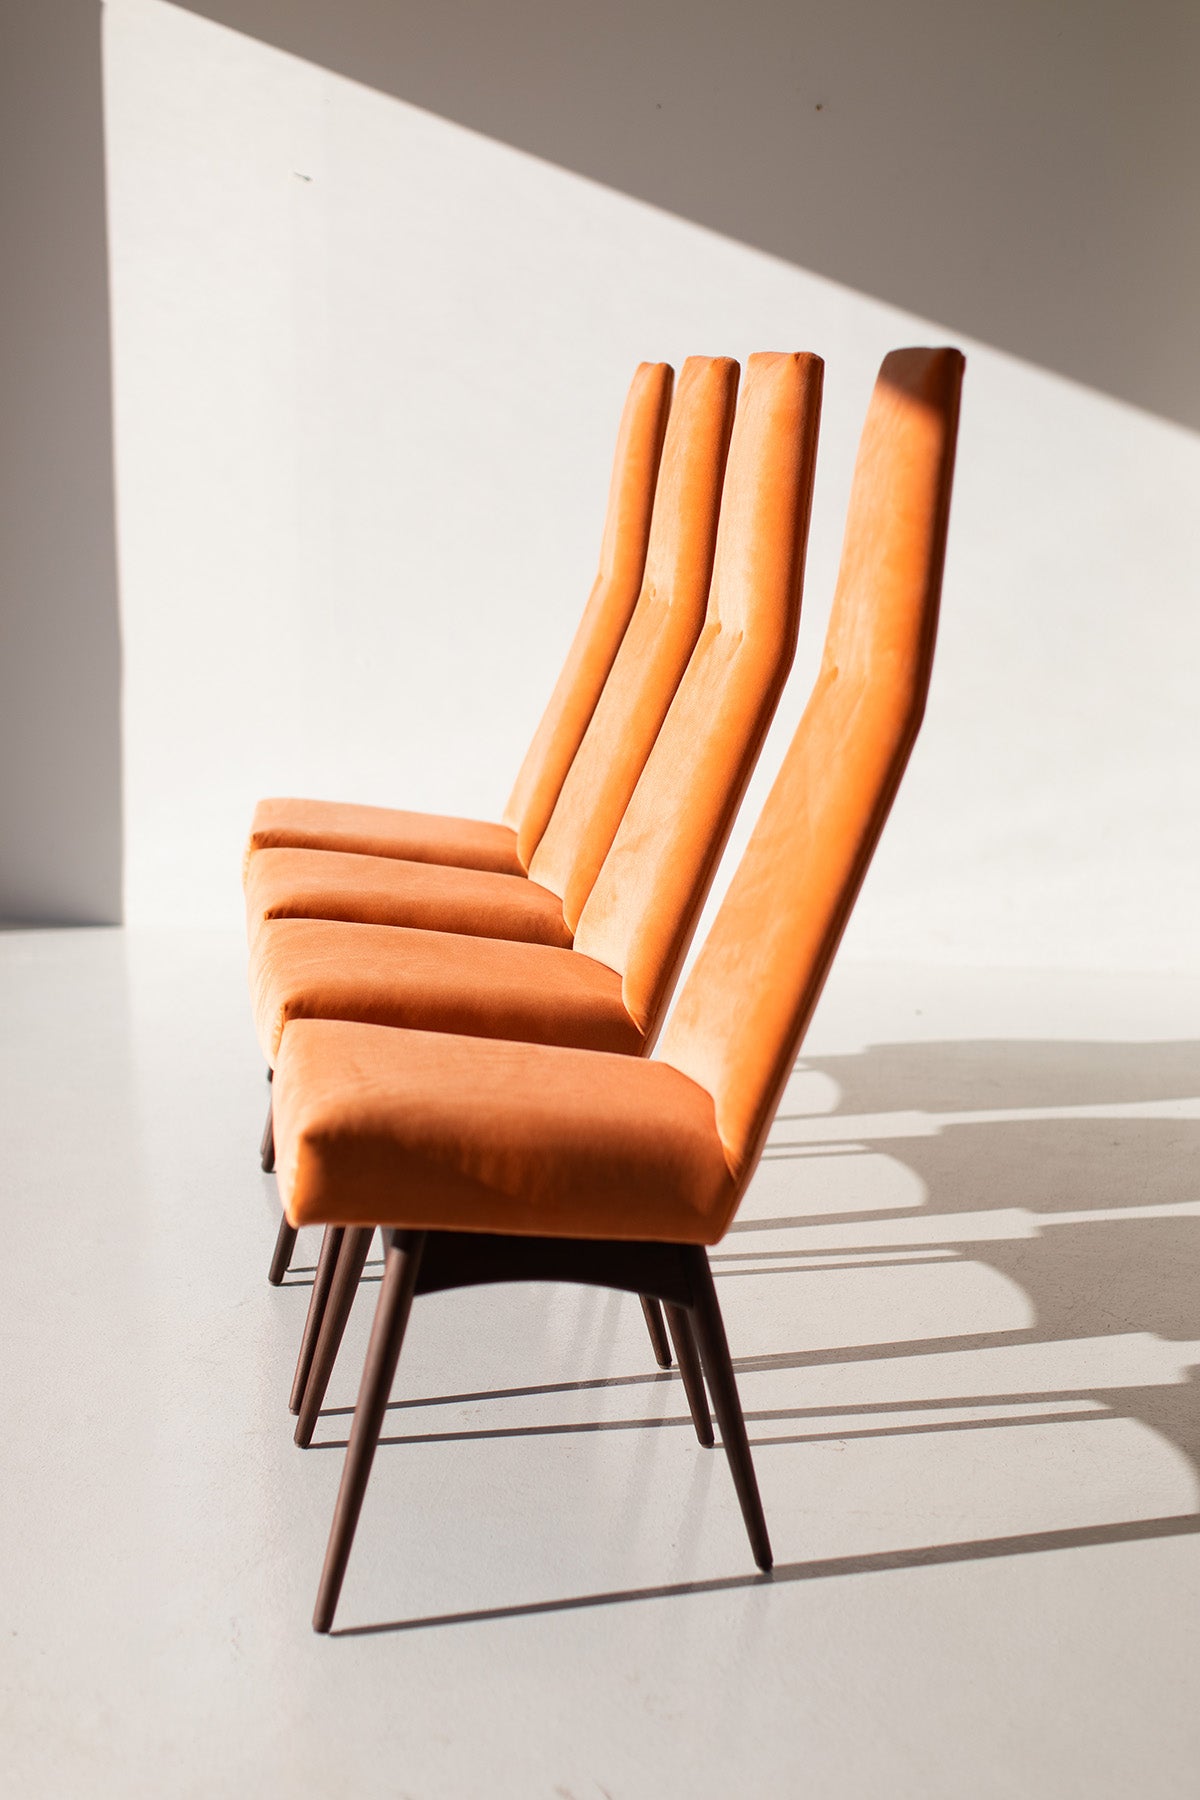 Alto Mid Century Modern Dining Chair for Craft Associates - 2404